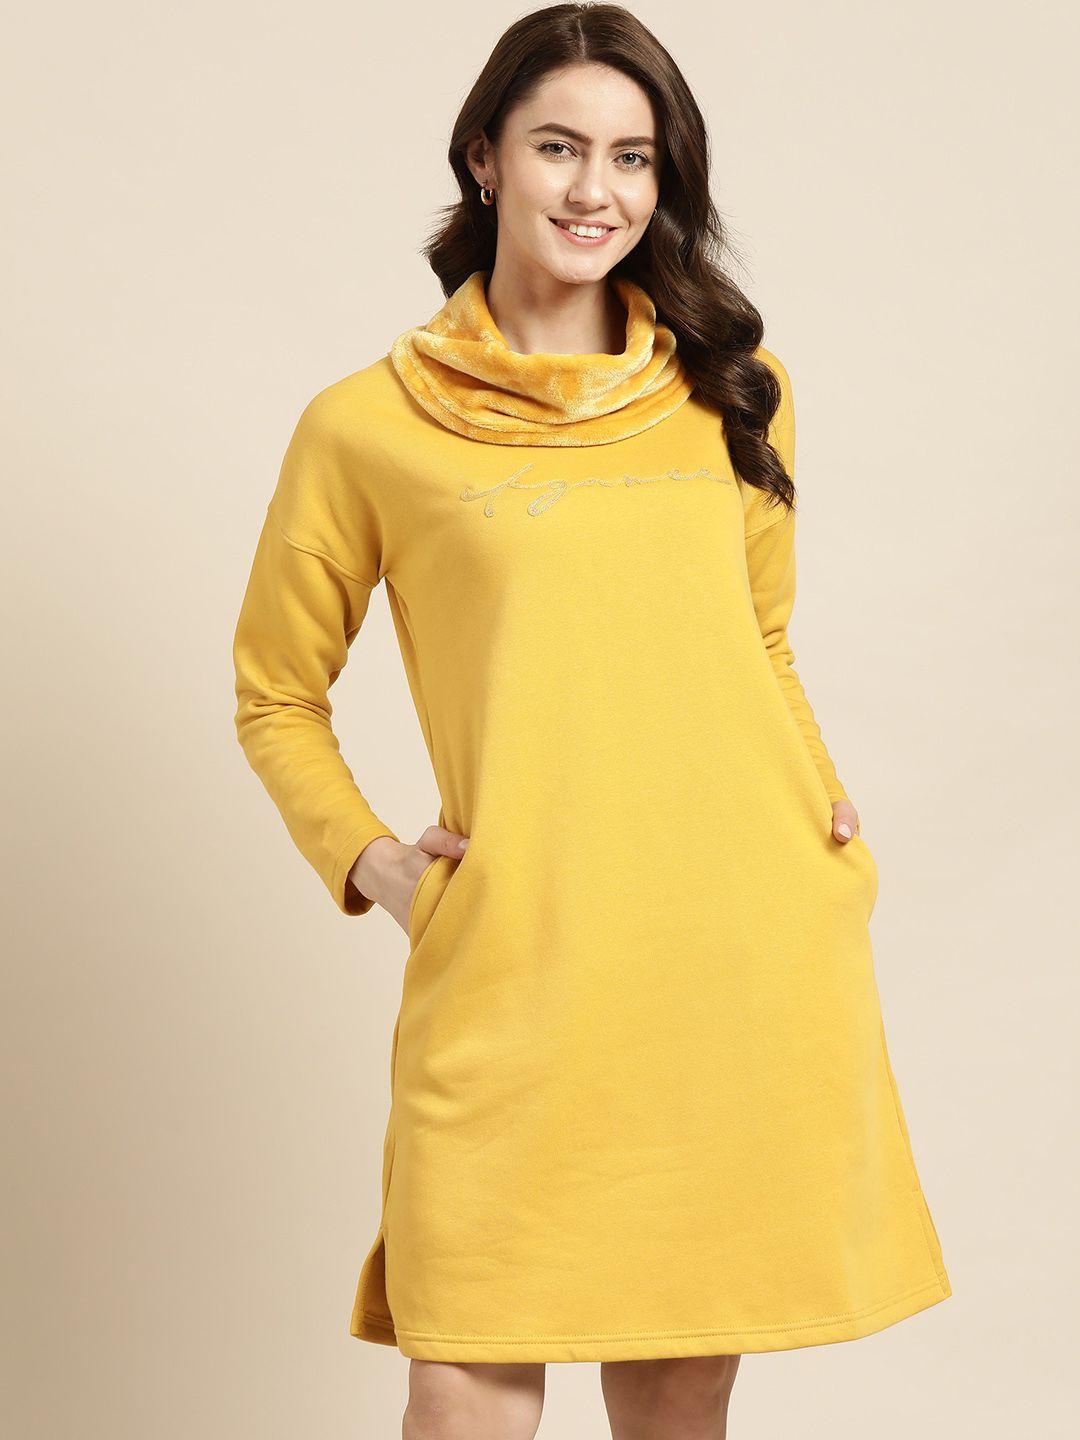 sweet-dreams-mustard-yellow-embroidered-turtle-neck-fleece-nightdress